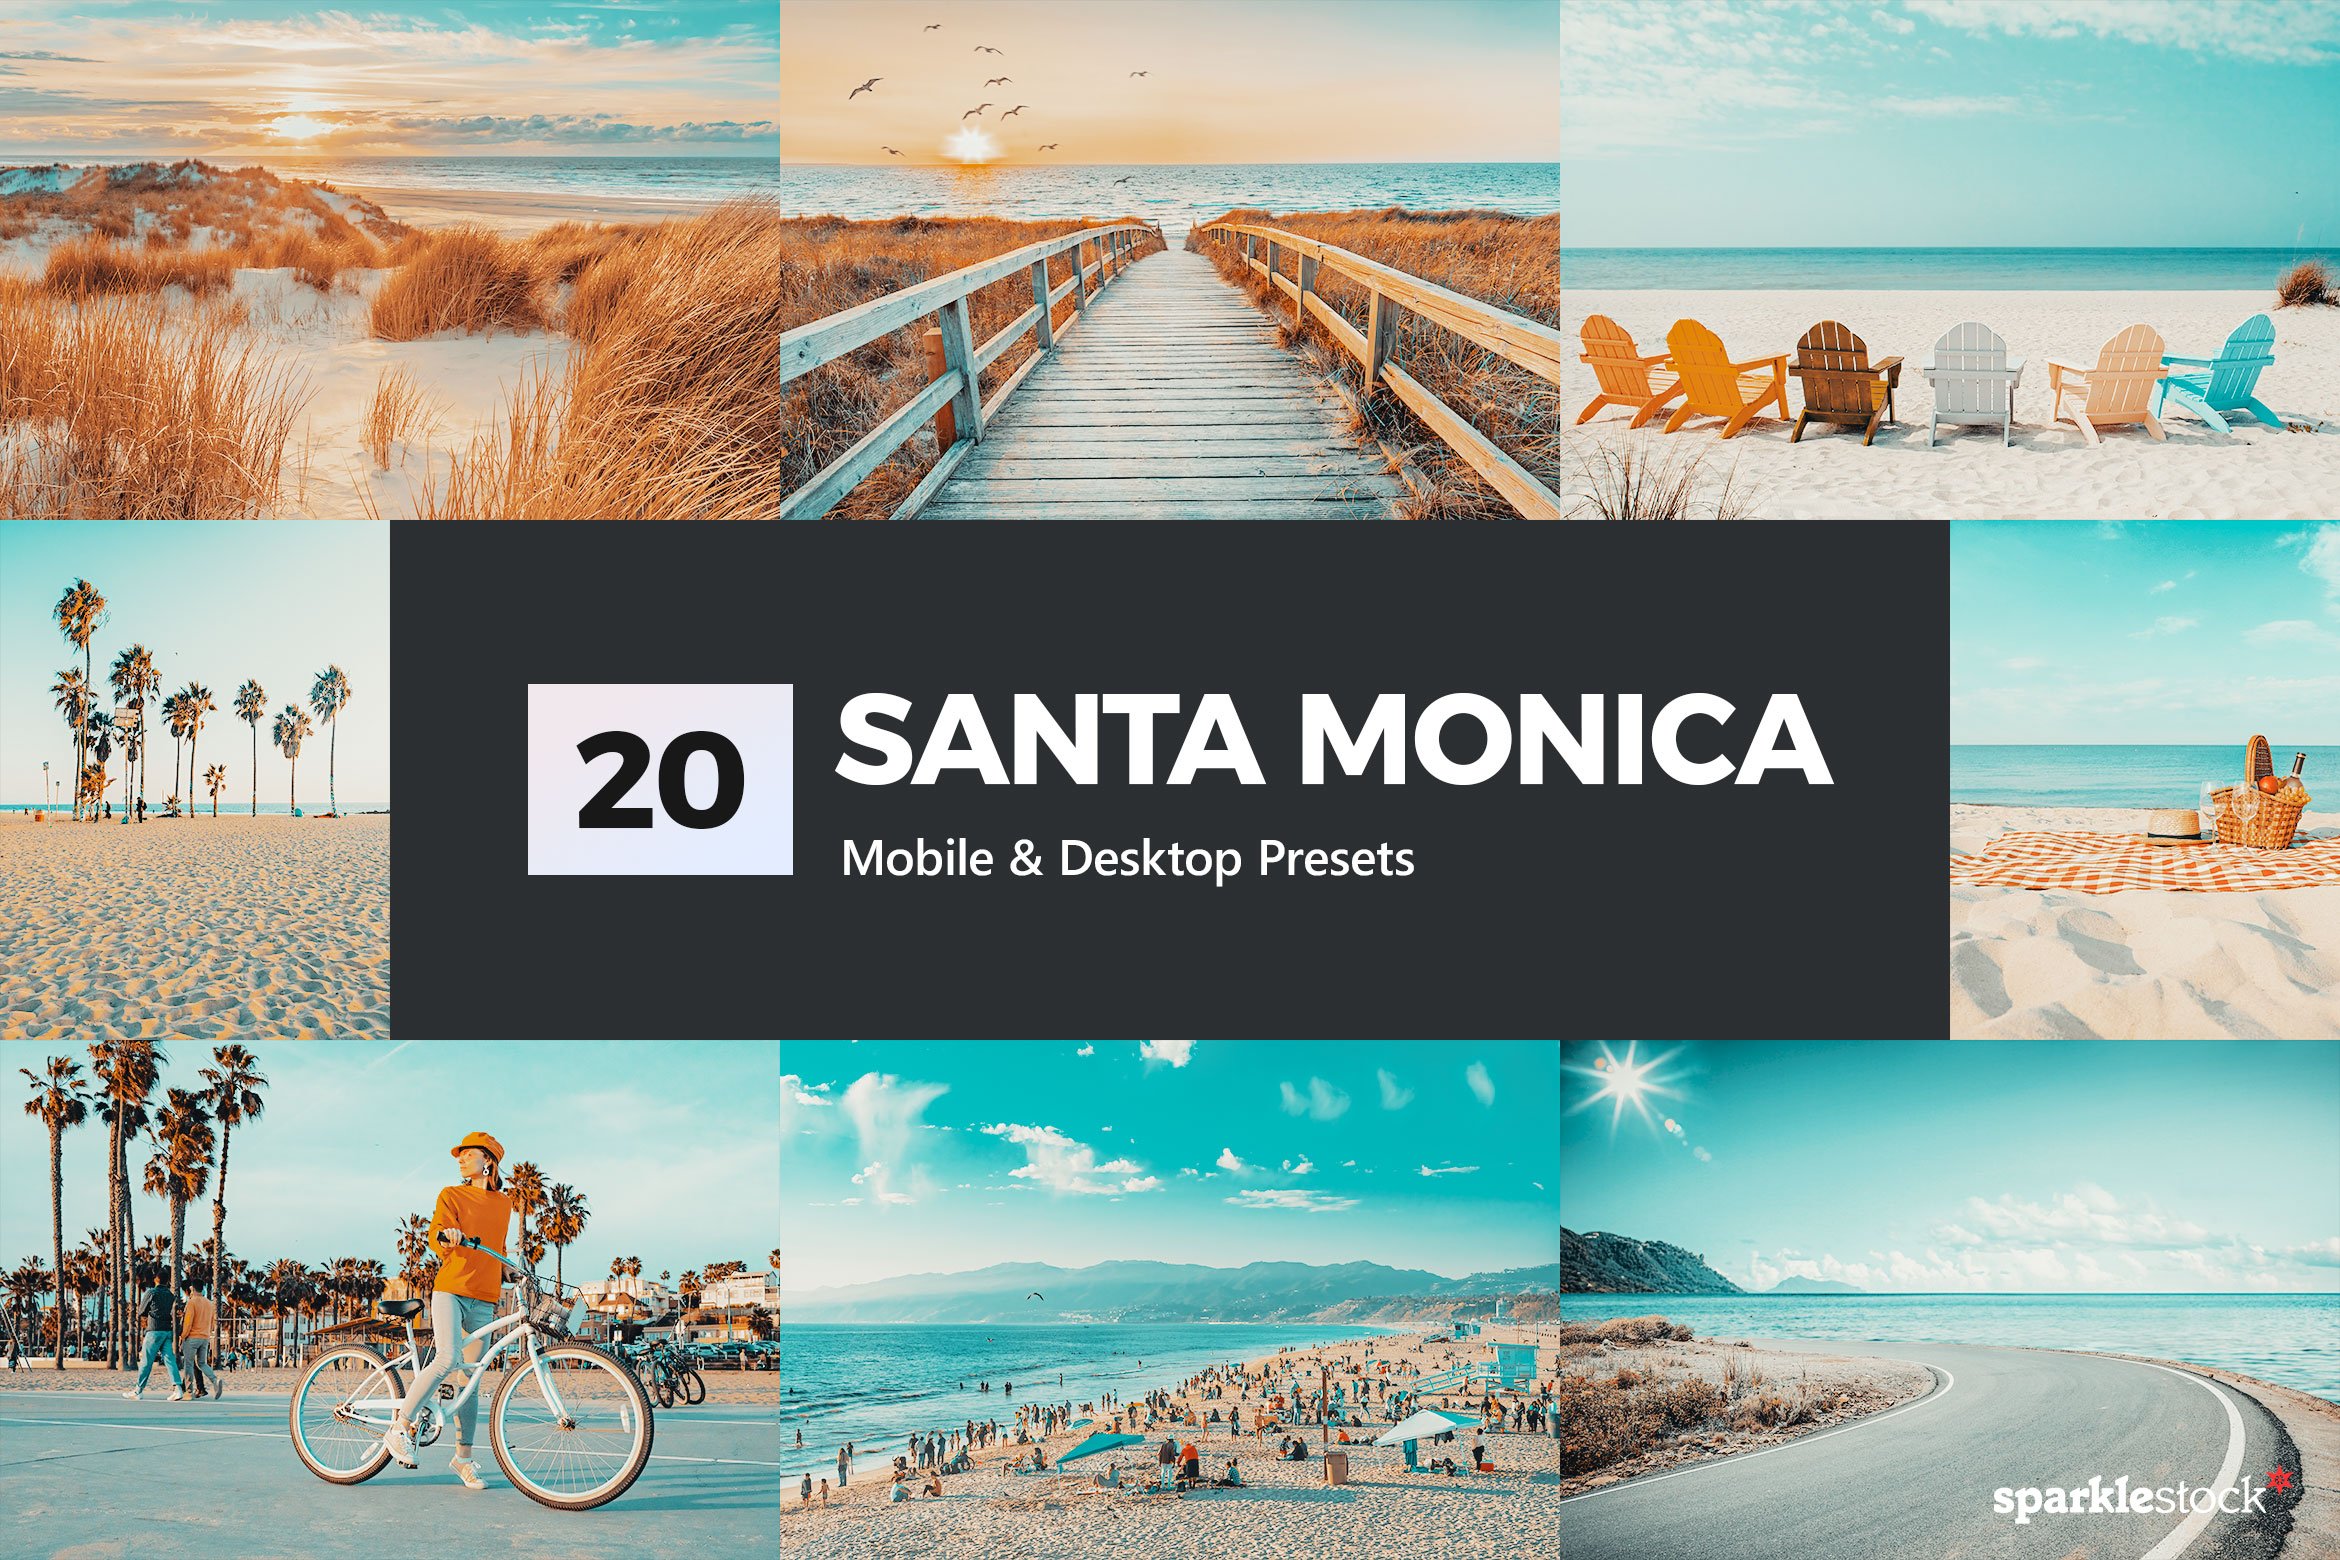 Santa Monica Lightroom Presets & LUTcover image.